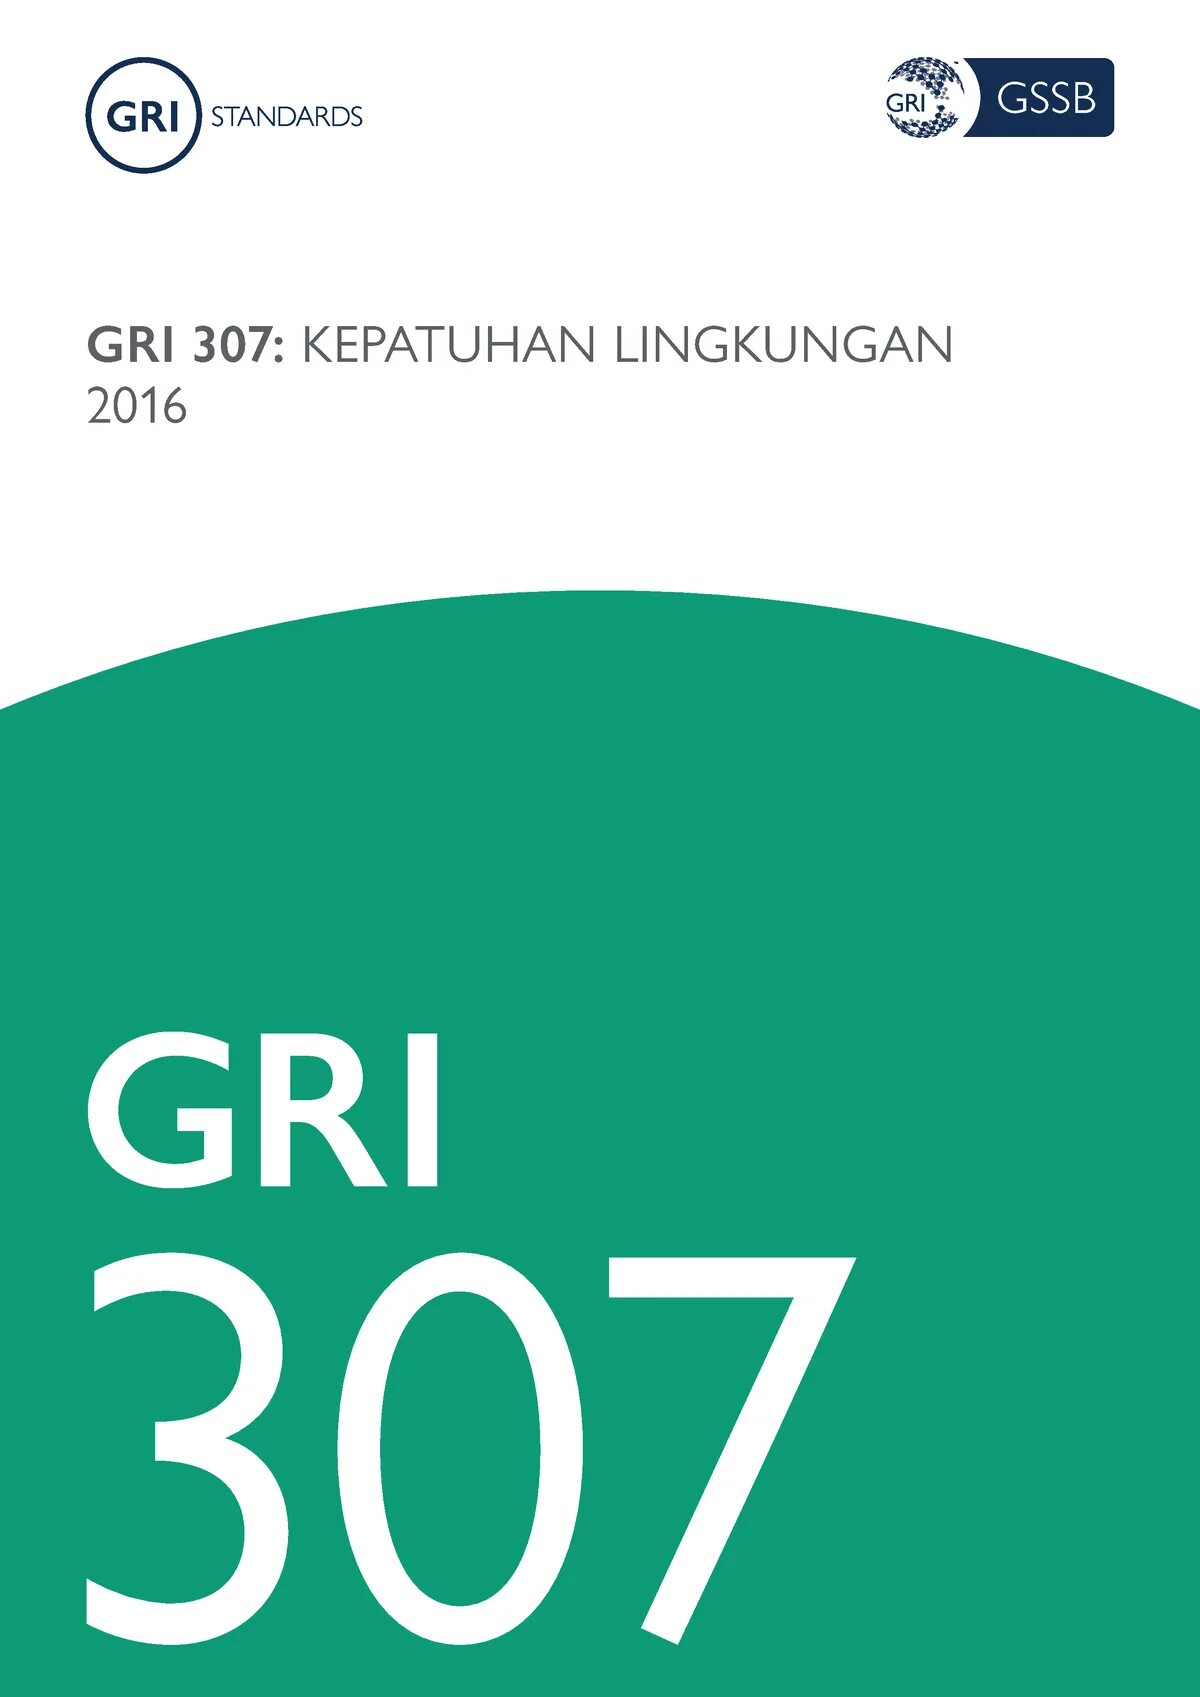 Стандарты gri. Gri стандарты. Gri индекс. Gri 306 2016. Gri Global reporting initiative.